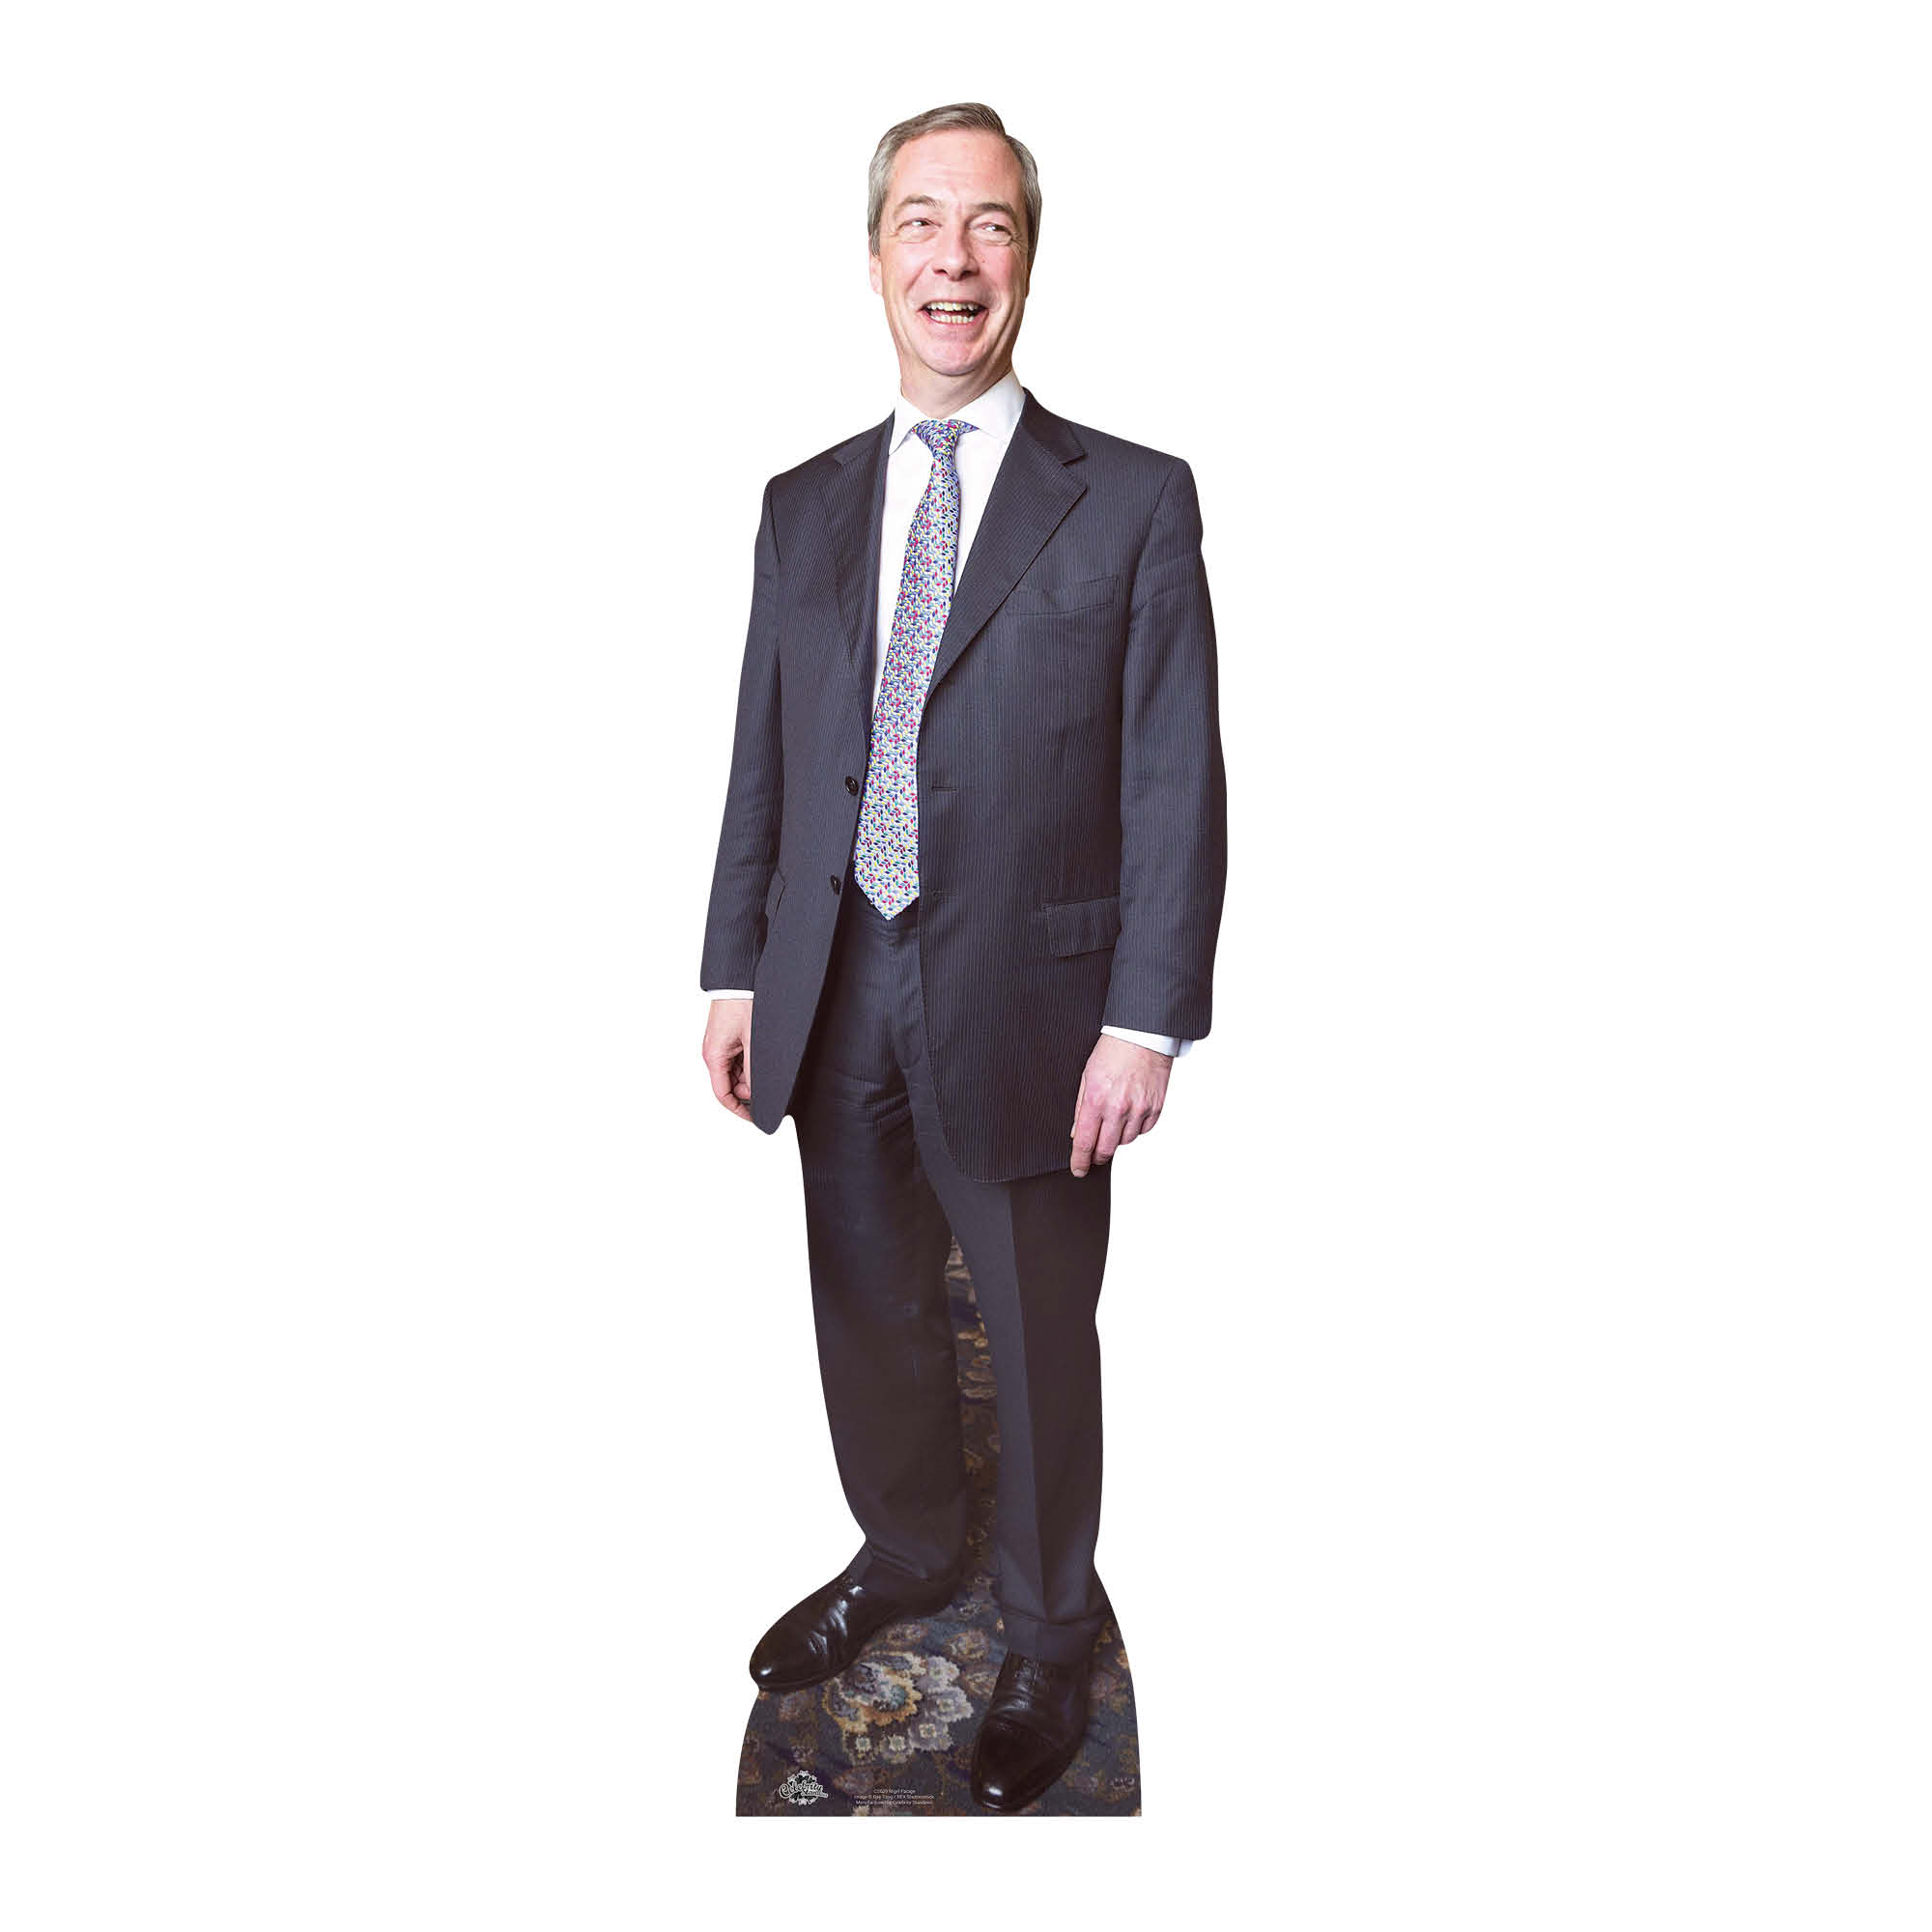 CS629 Nigel Farage Height 181cm Lifesize Cardboard Cutout – Star Cutouts